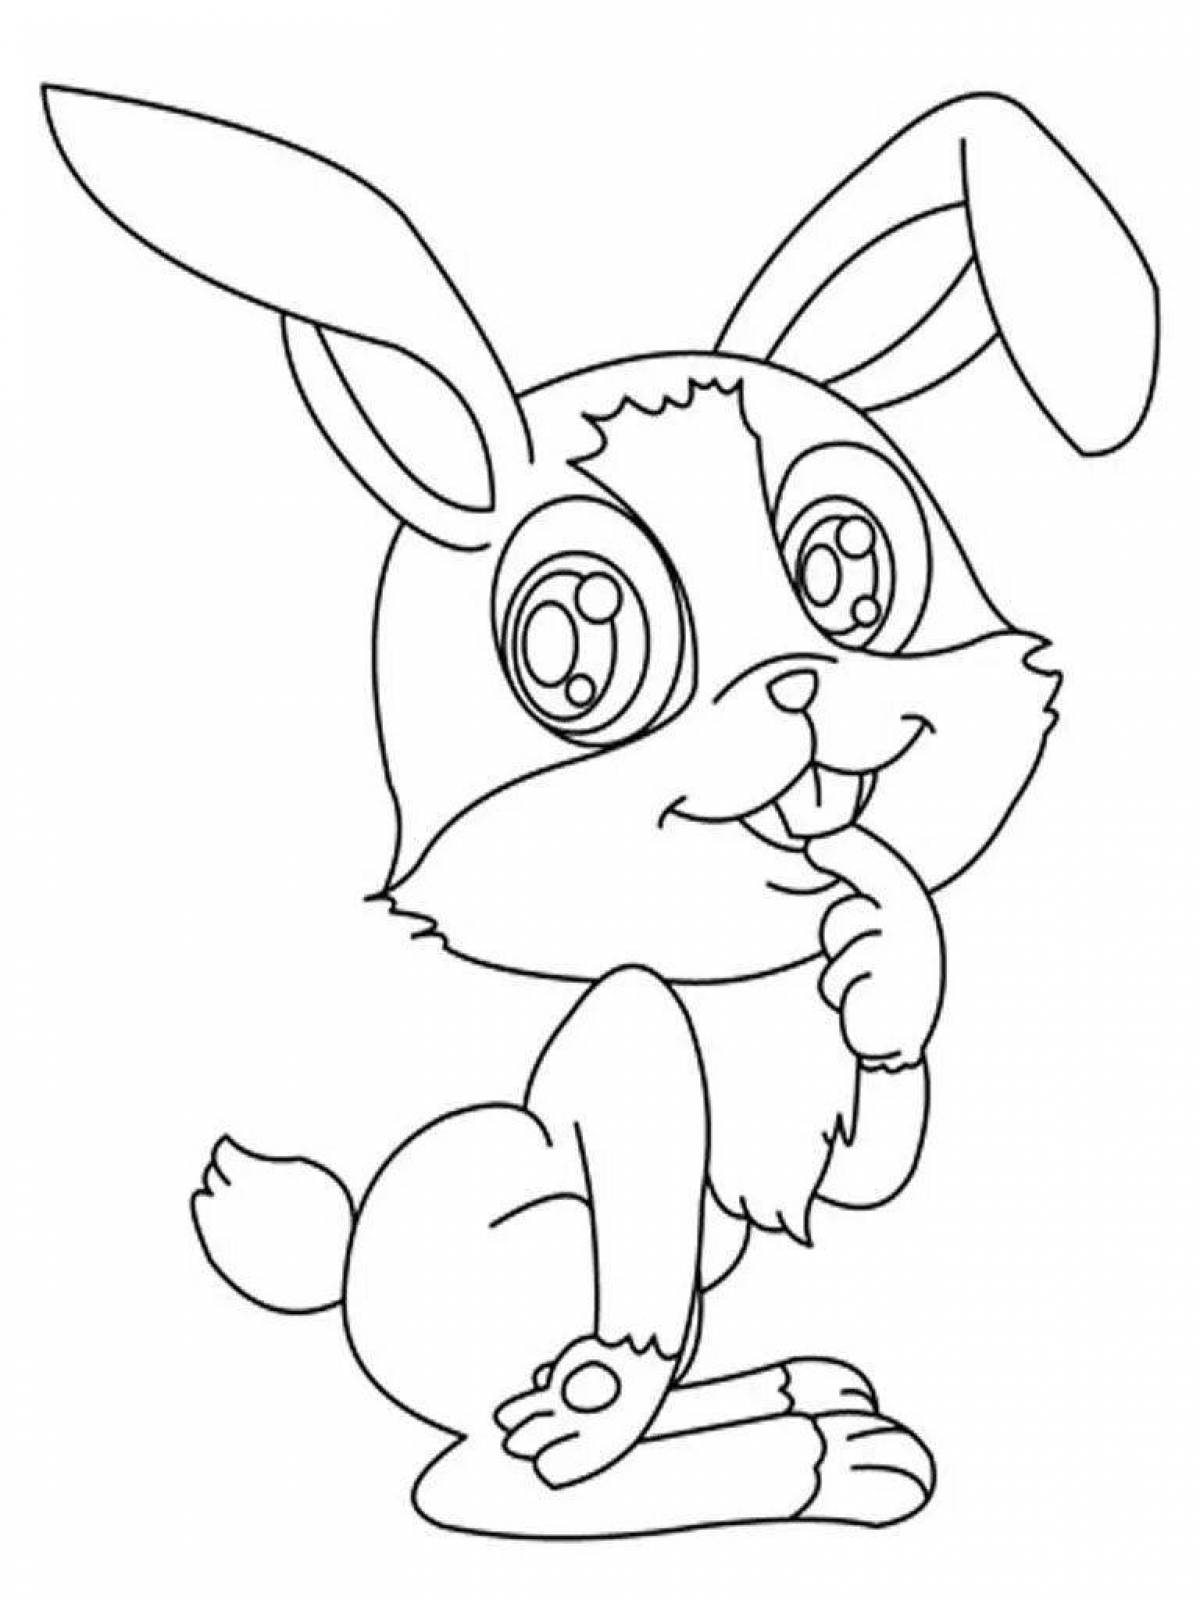 Adorable rabbit coloring book